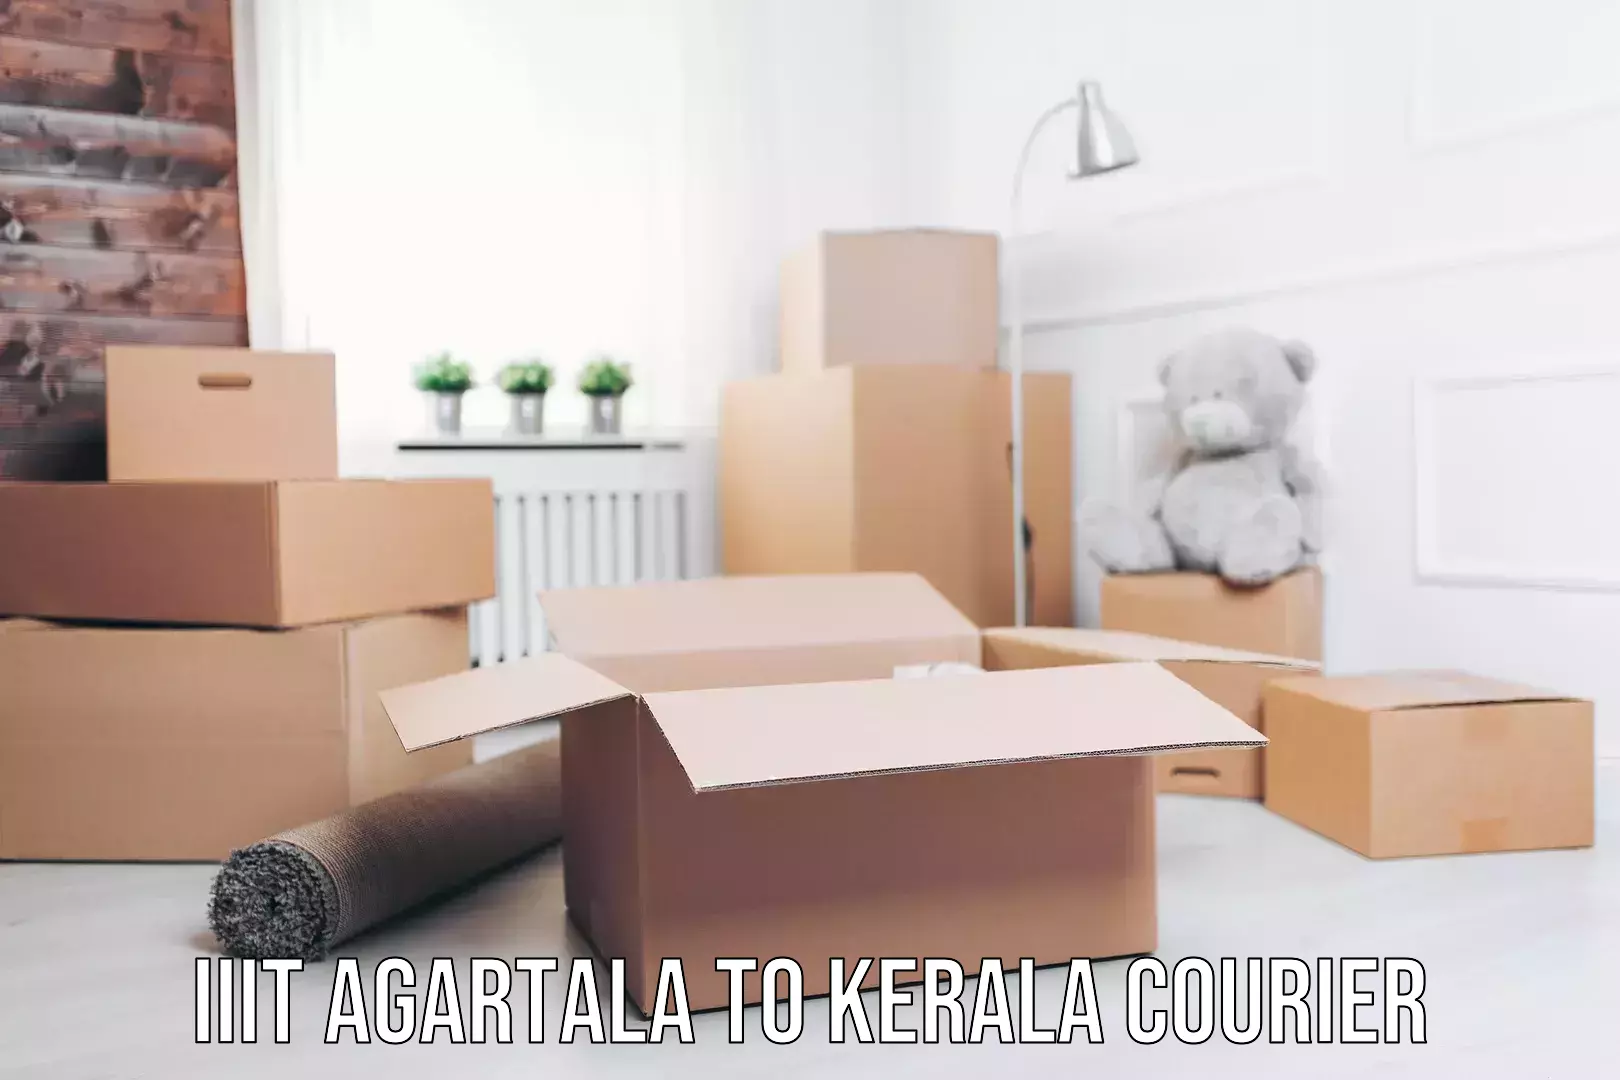 Business delivery service IIIT Agartala to Kerala